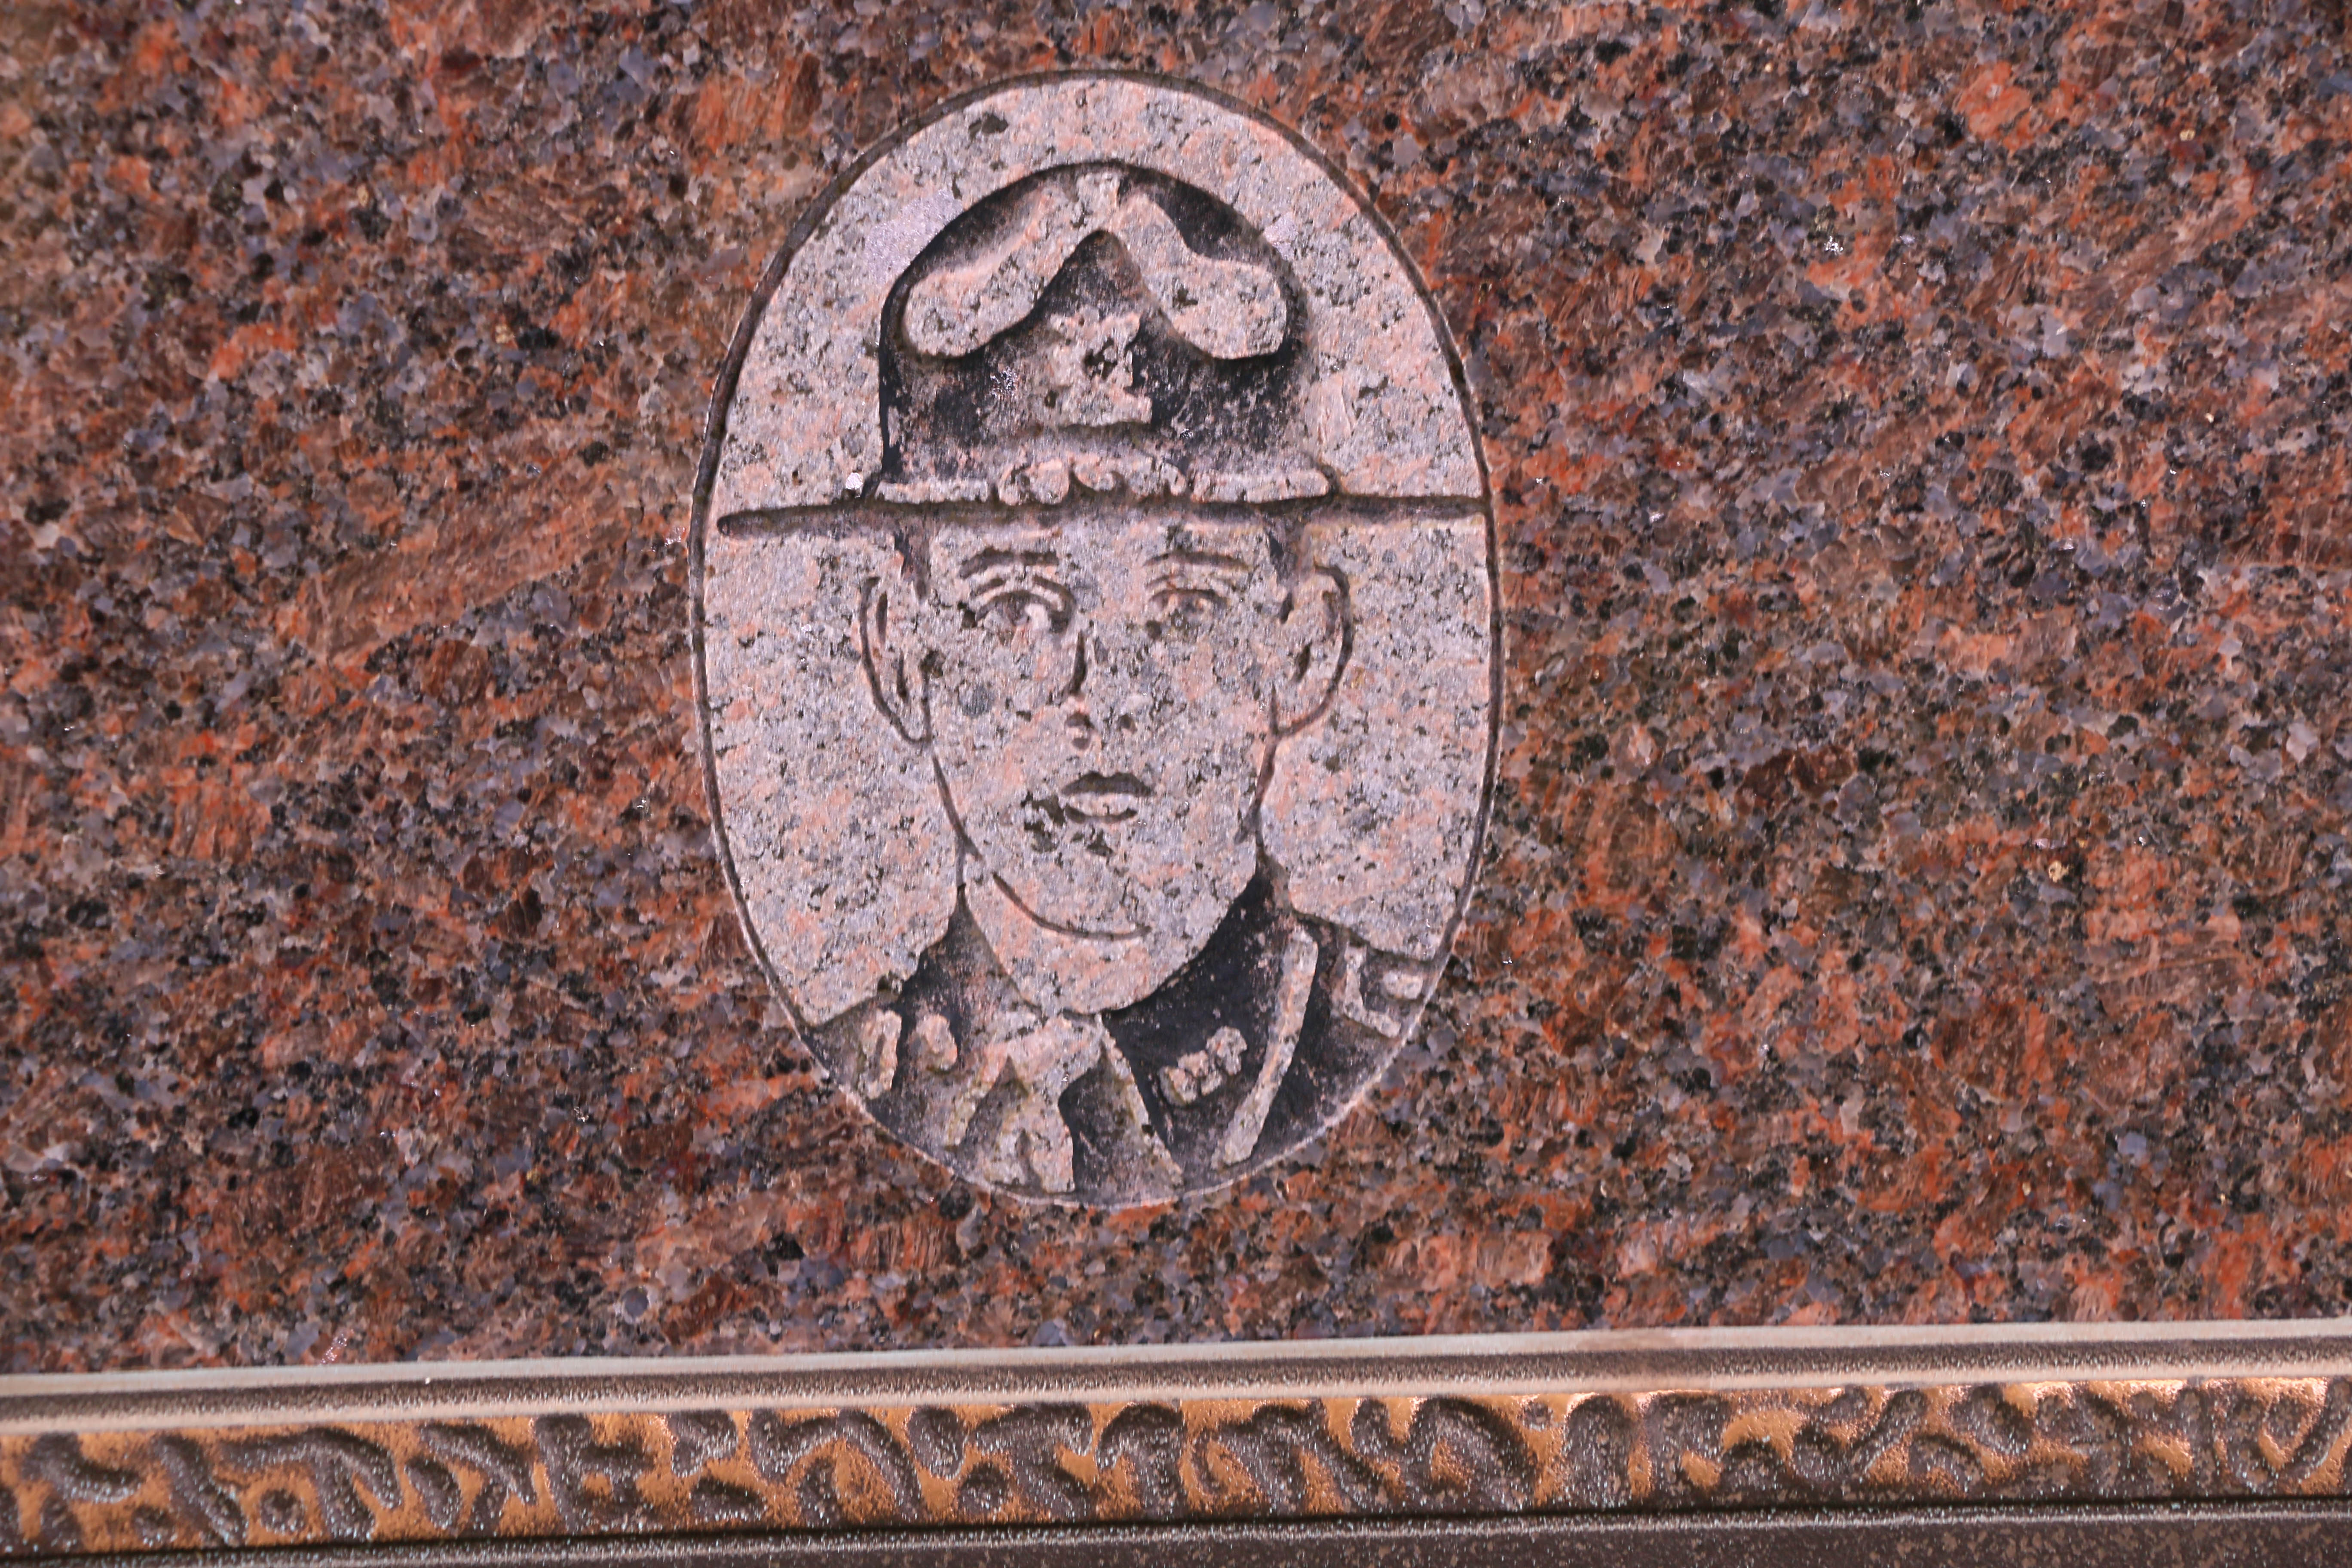 Headstone close-up - ISP portrait